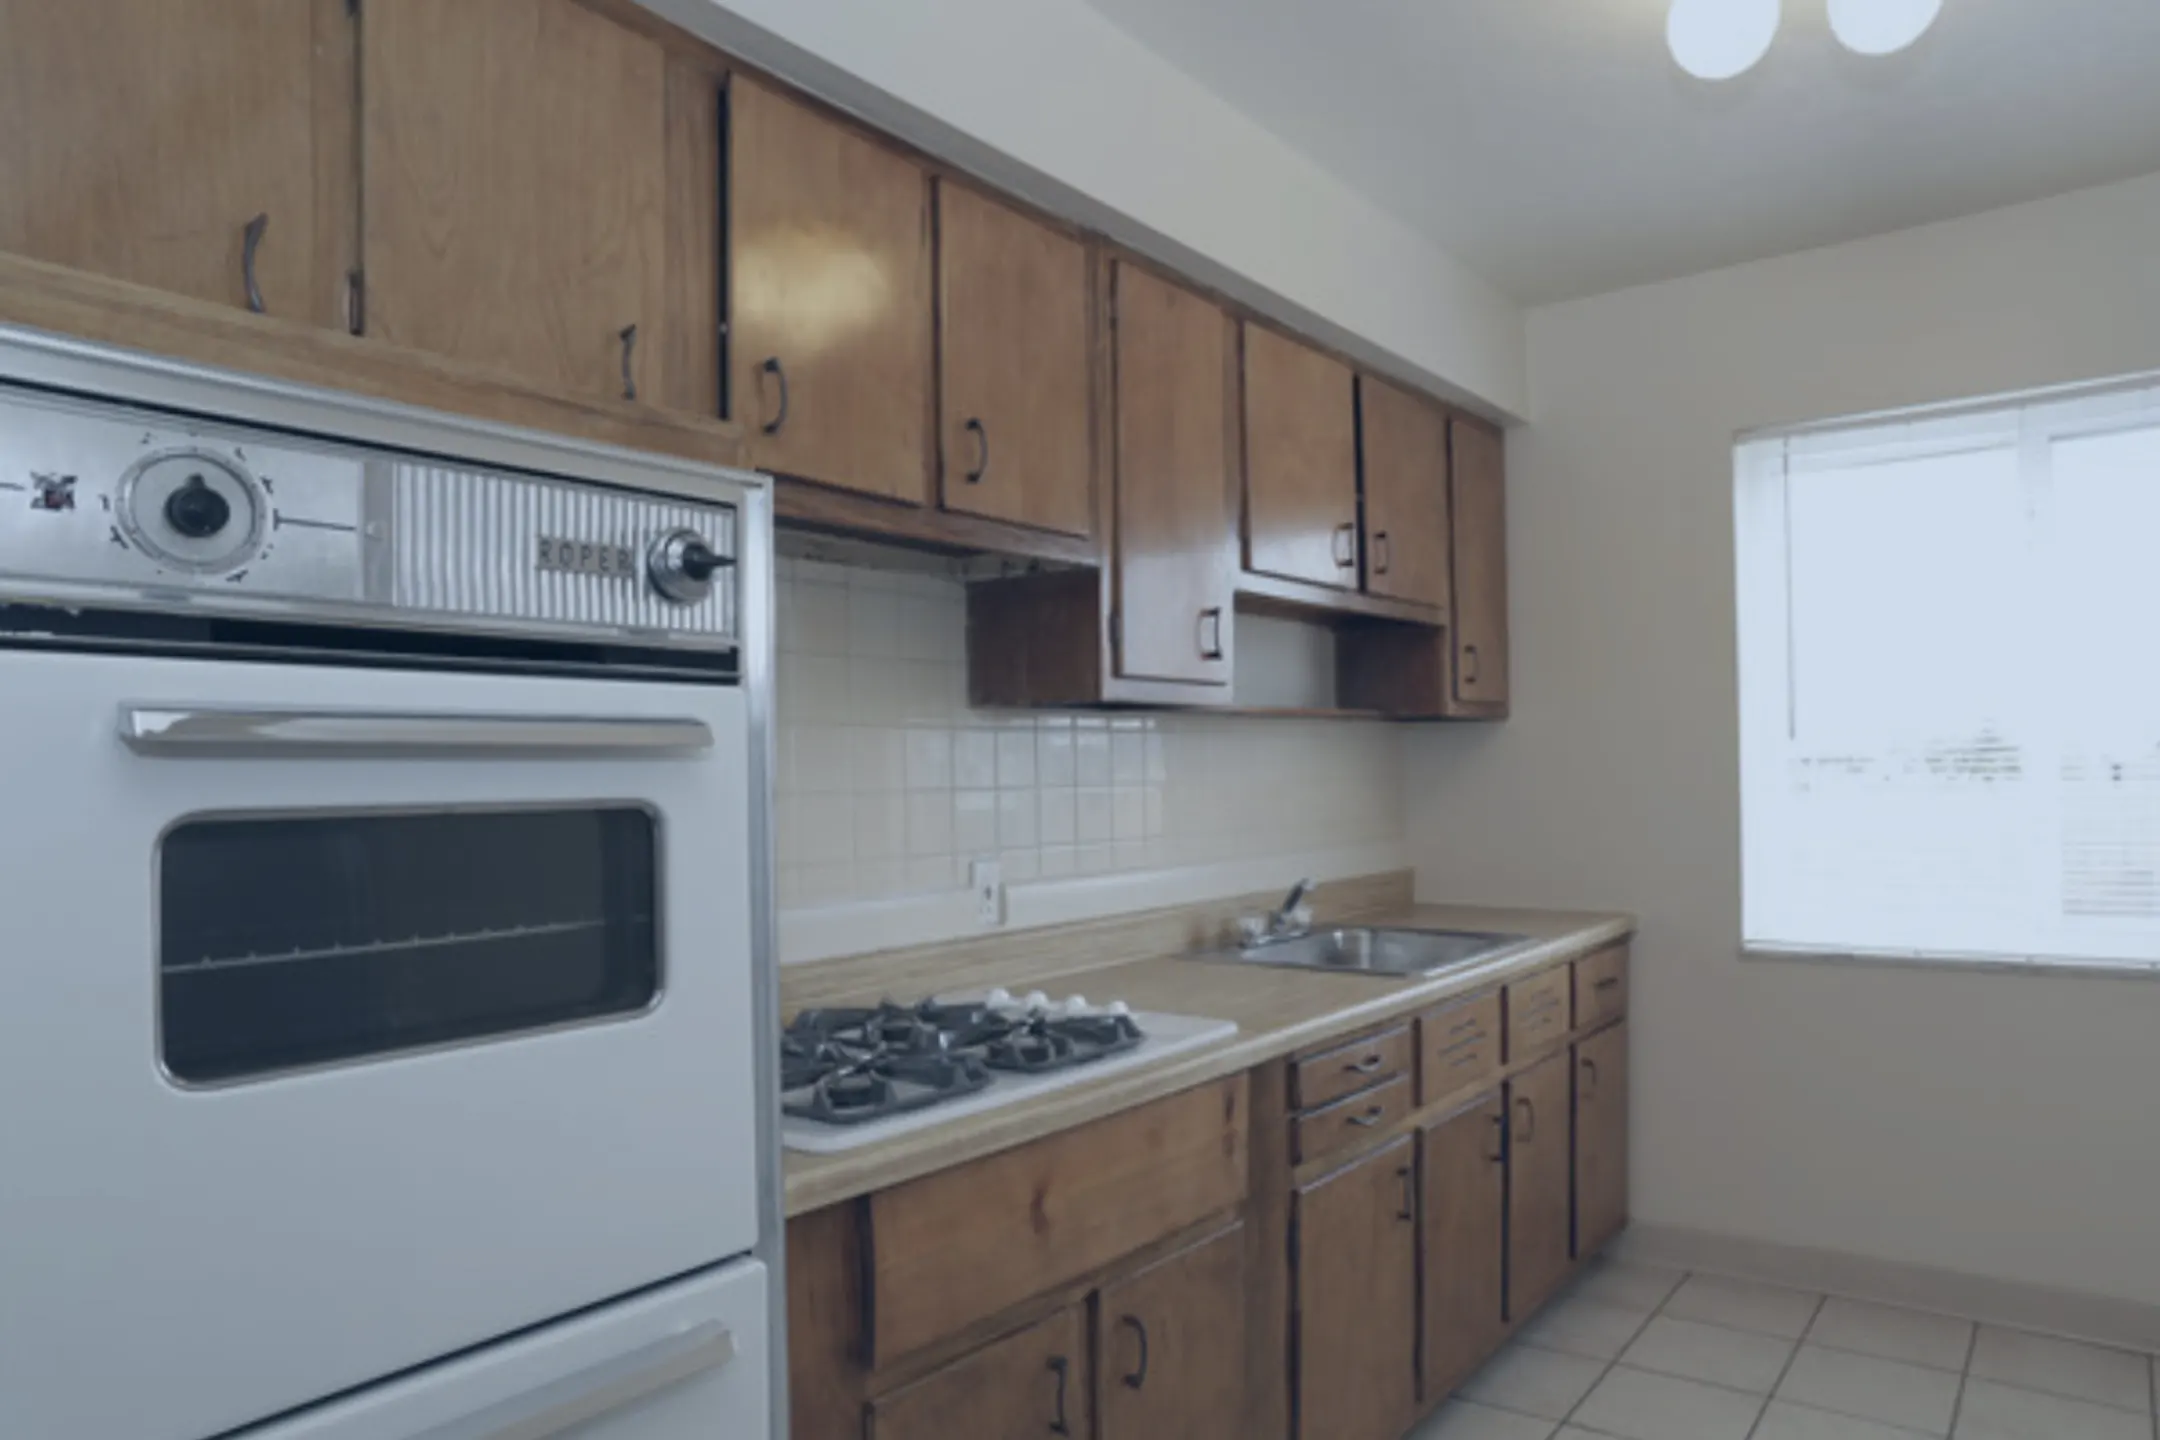 Kitchen - Stoneybrook Apartments - Bedford, OH